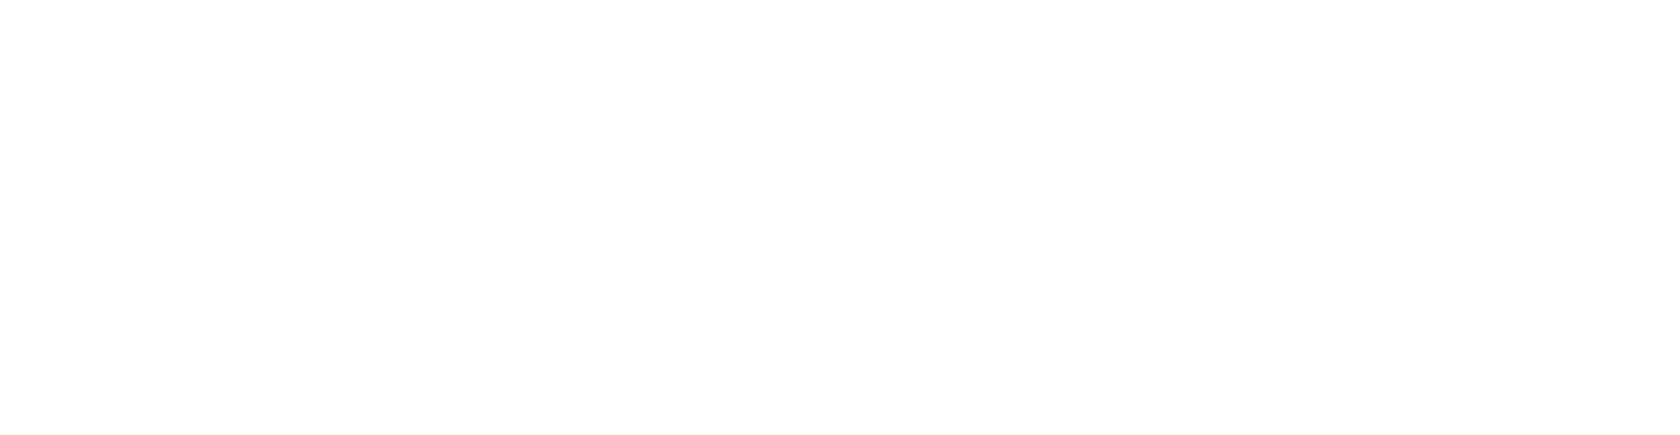 Логотип adobe